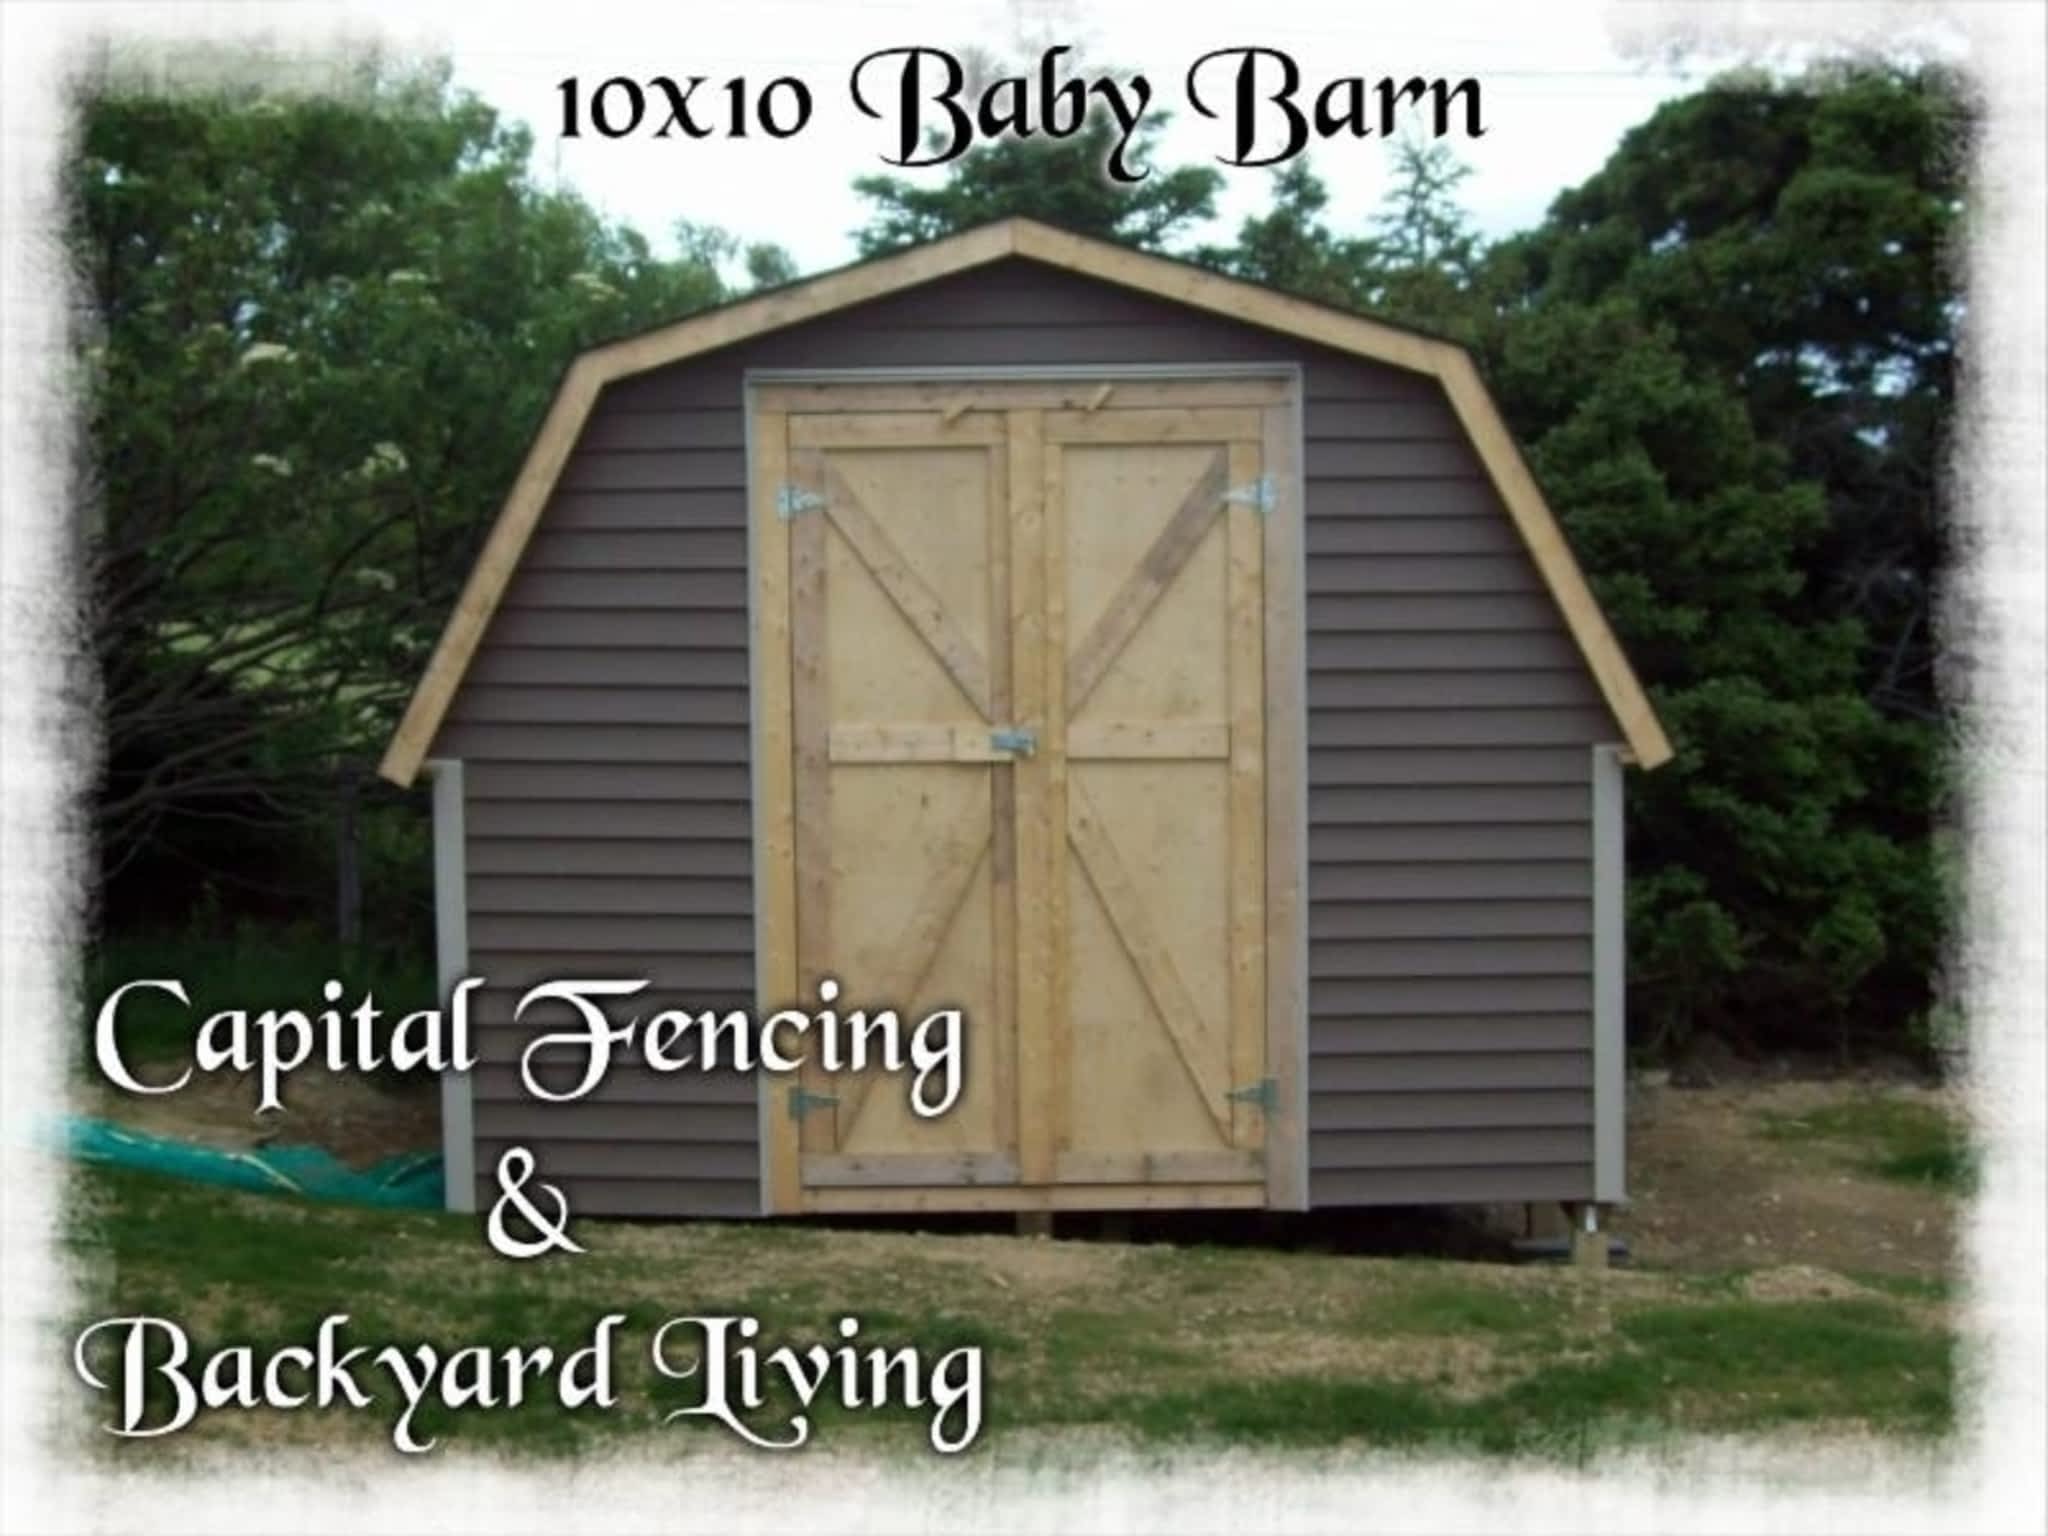 photo Capital Fencing & Backyard Living Inc.